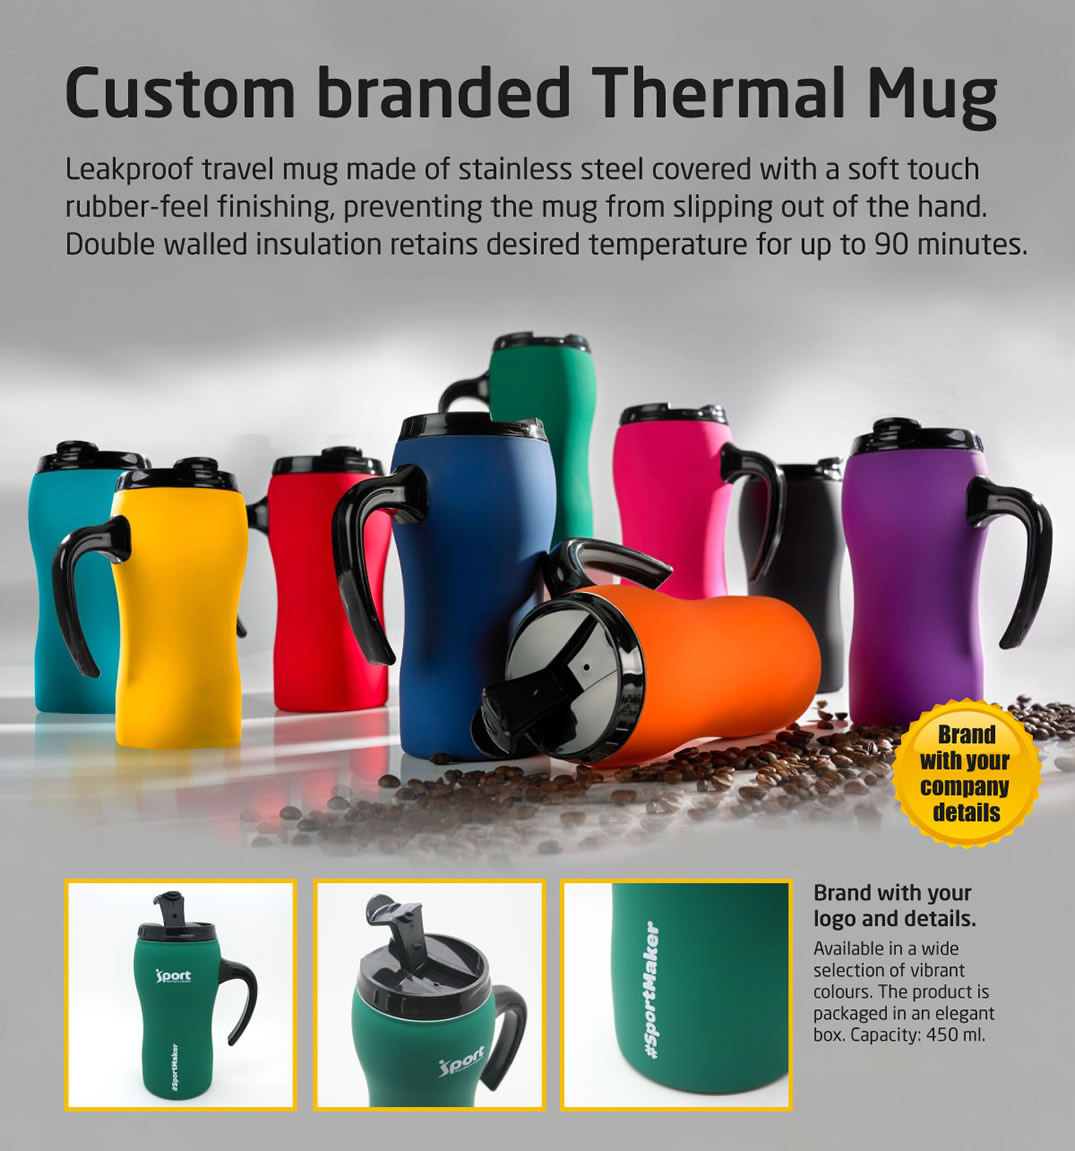 Thermal Mug - Custom Branded